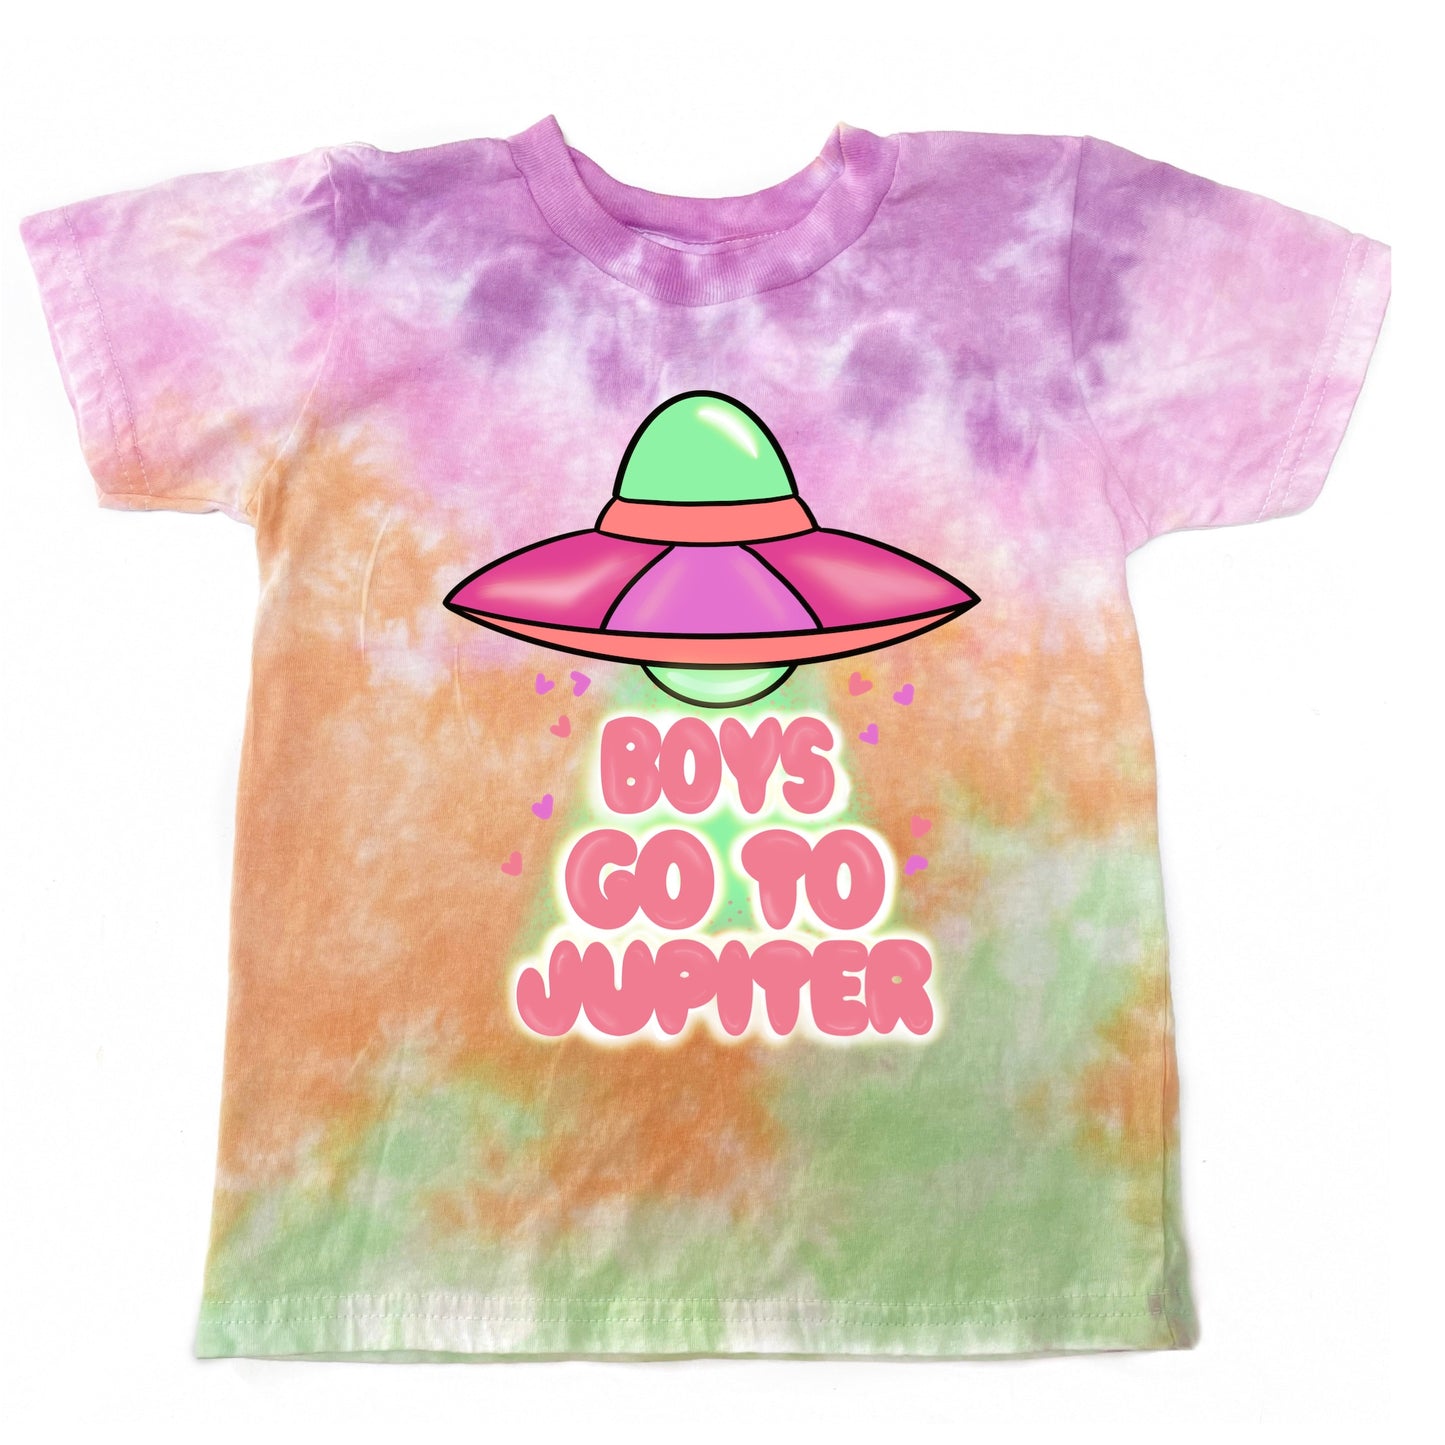 Boys Go To Jupiter Tie Dyed T-Shirt